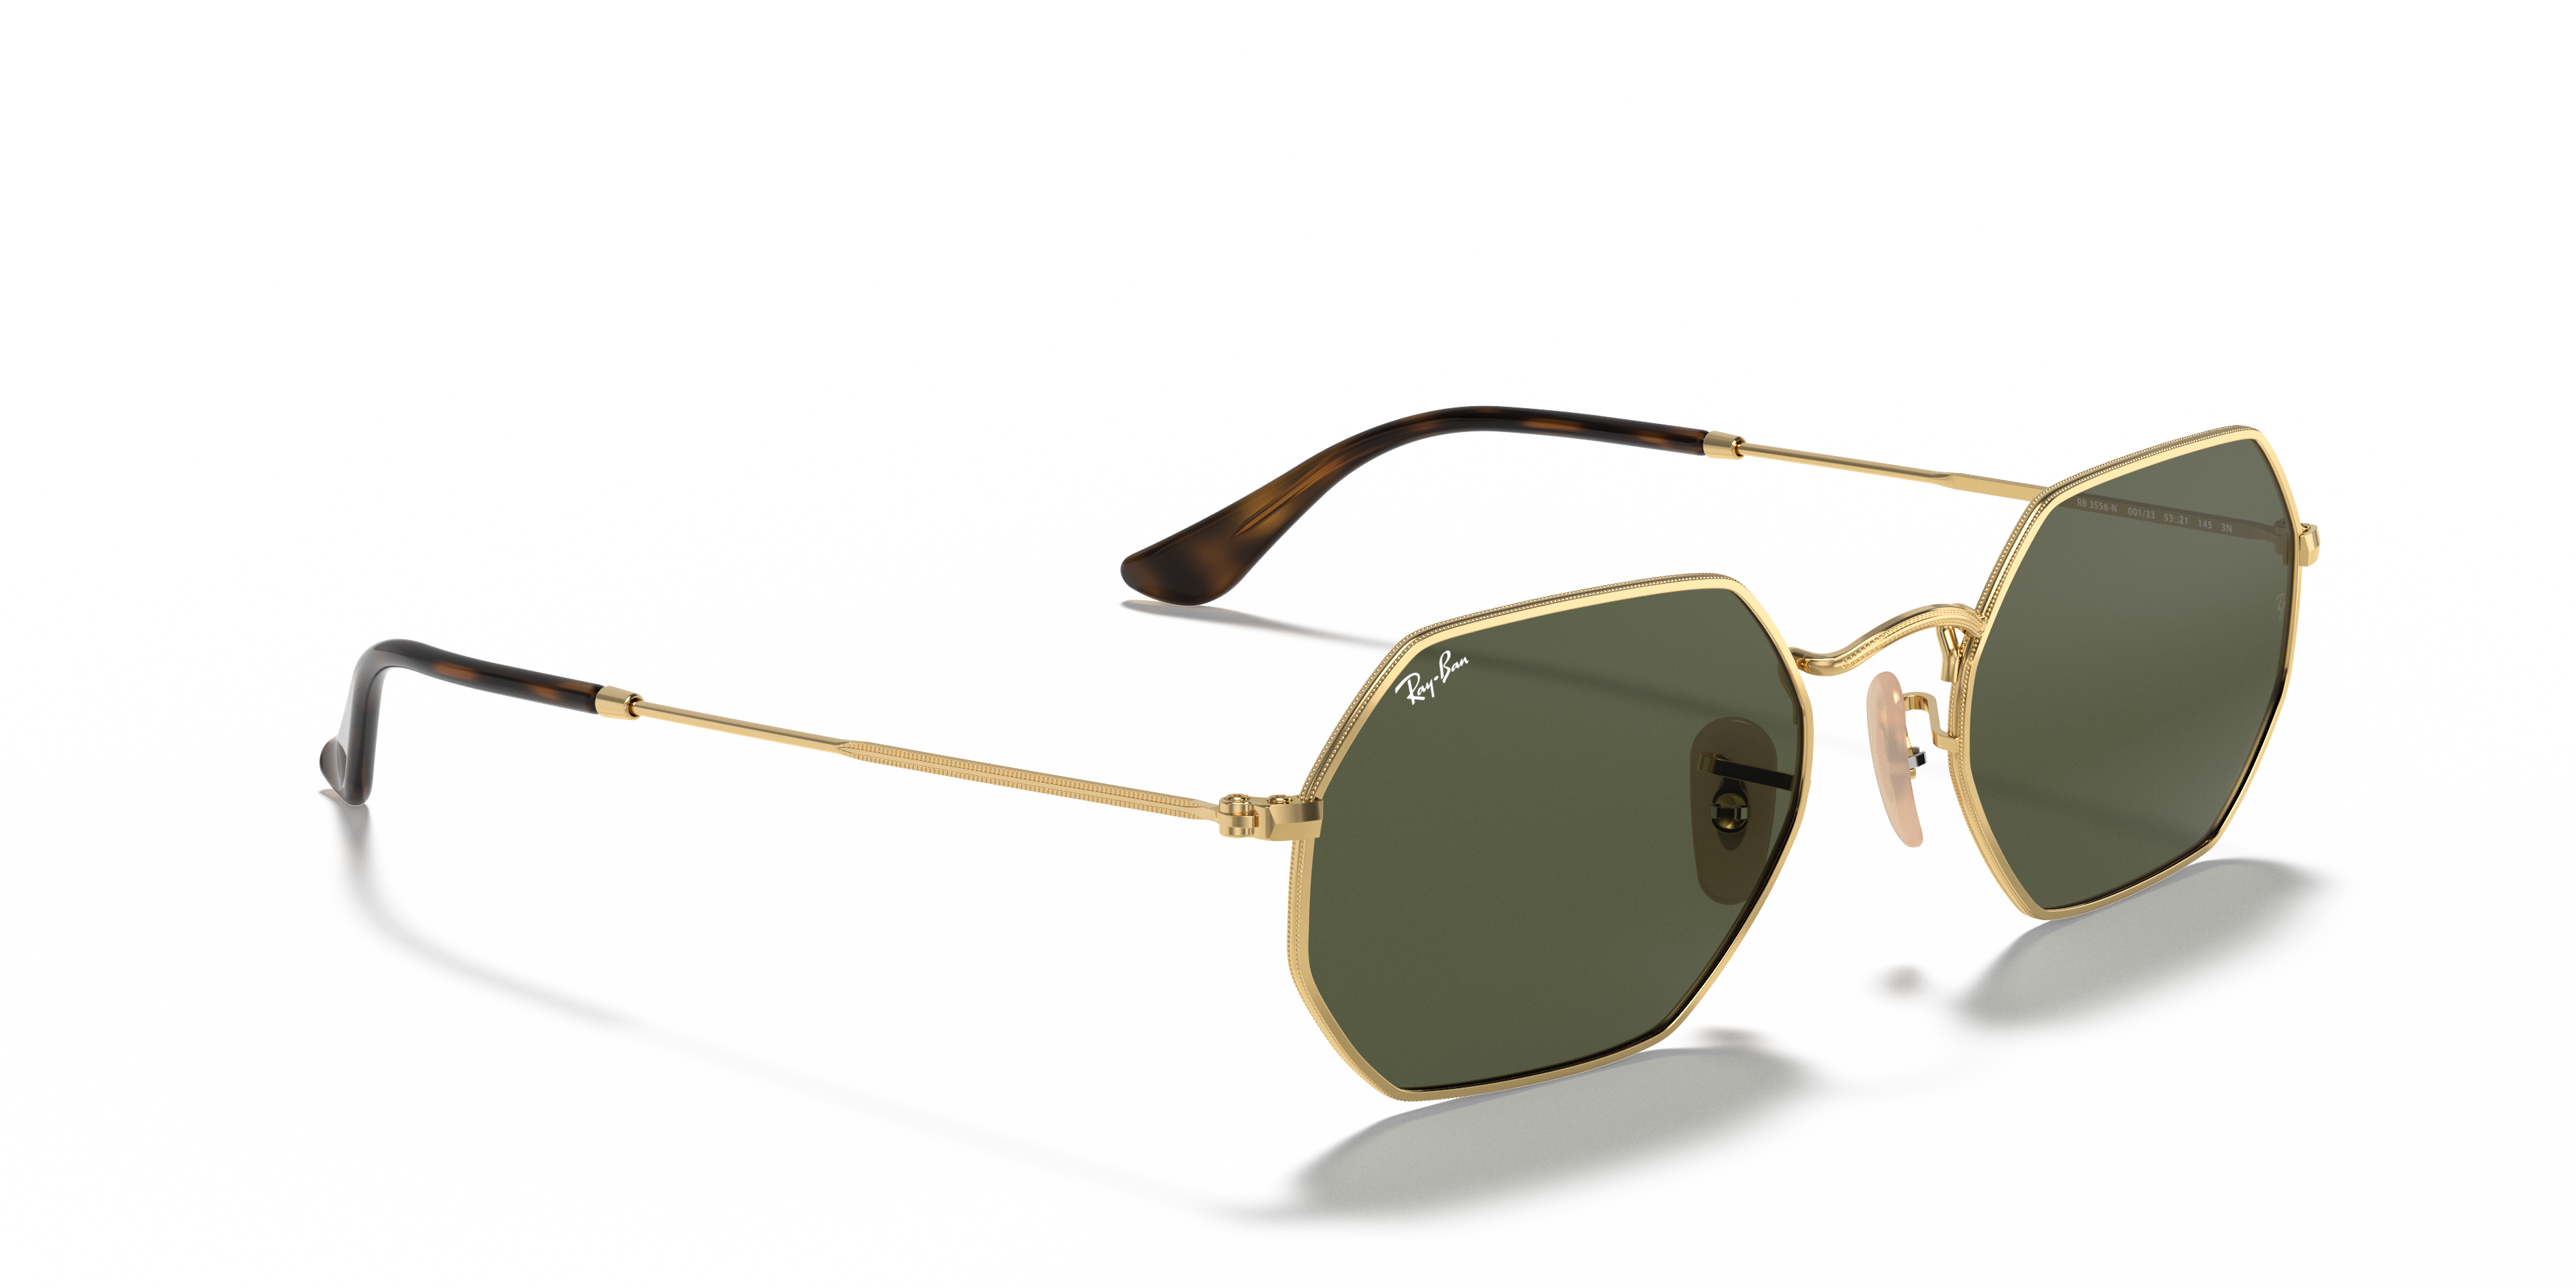 Rey Ban Aviator Classic Sonnenbrille Accessoires Sonnenbrillen Pilotenbrillen 